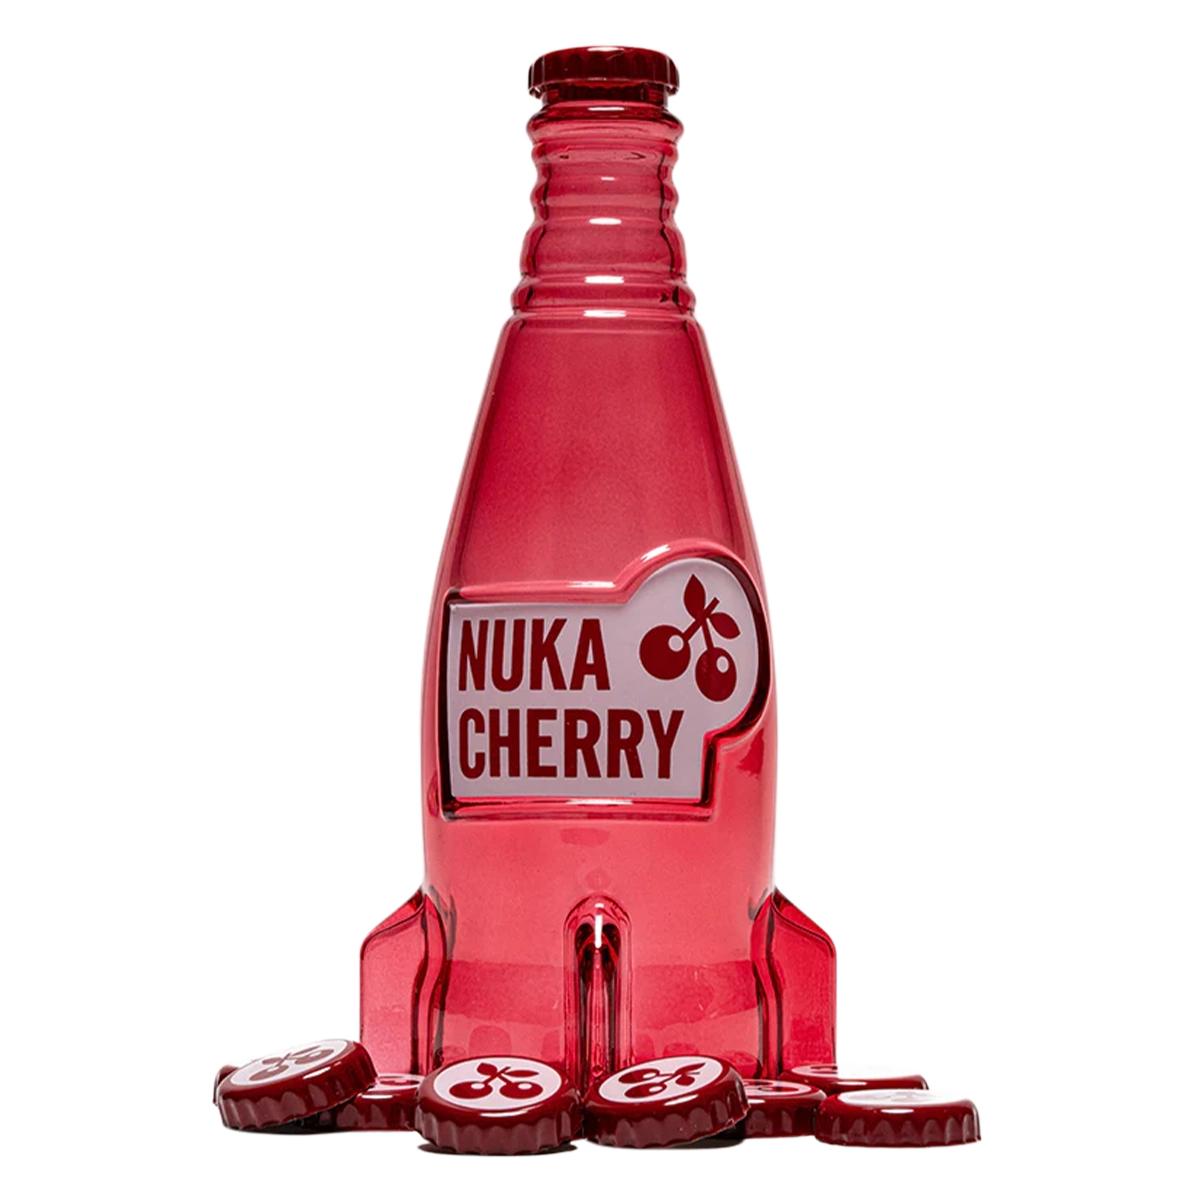 Fallout "Nuka Cola Cherry" Glasflasche und Kronkorken Cover